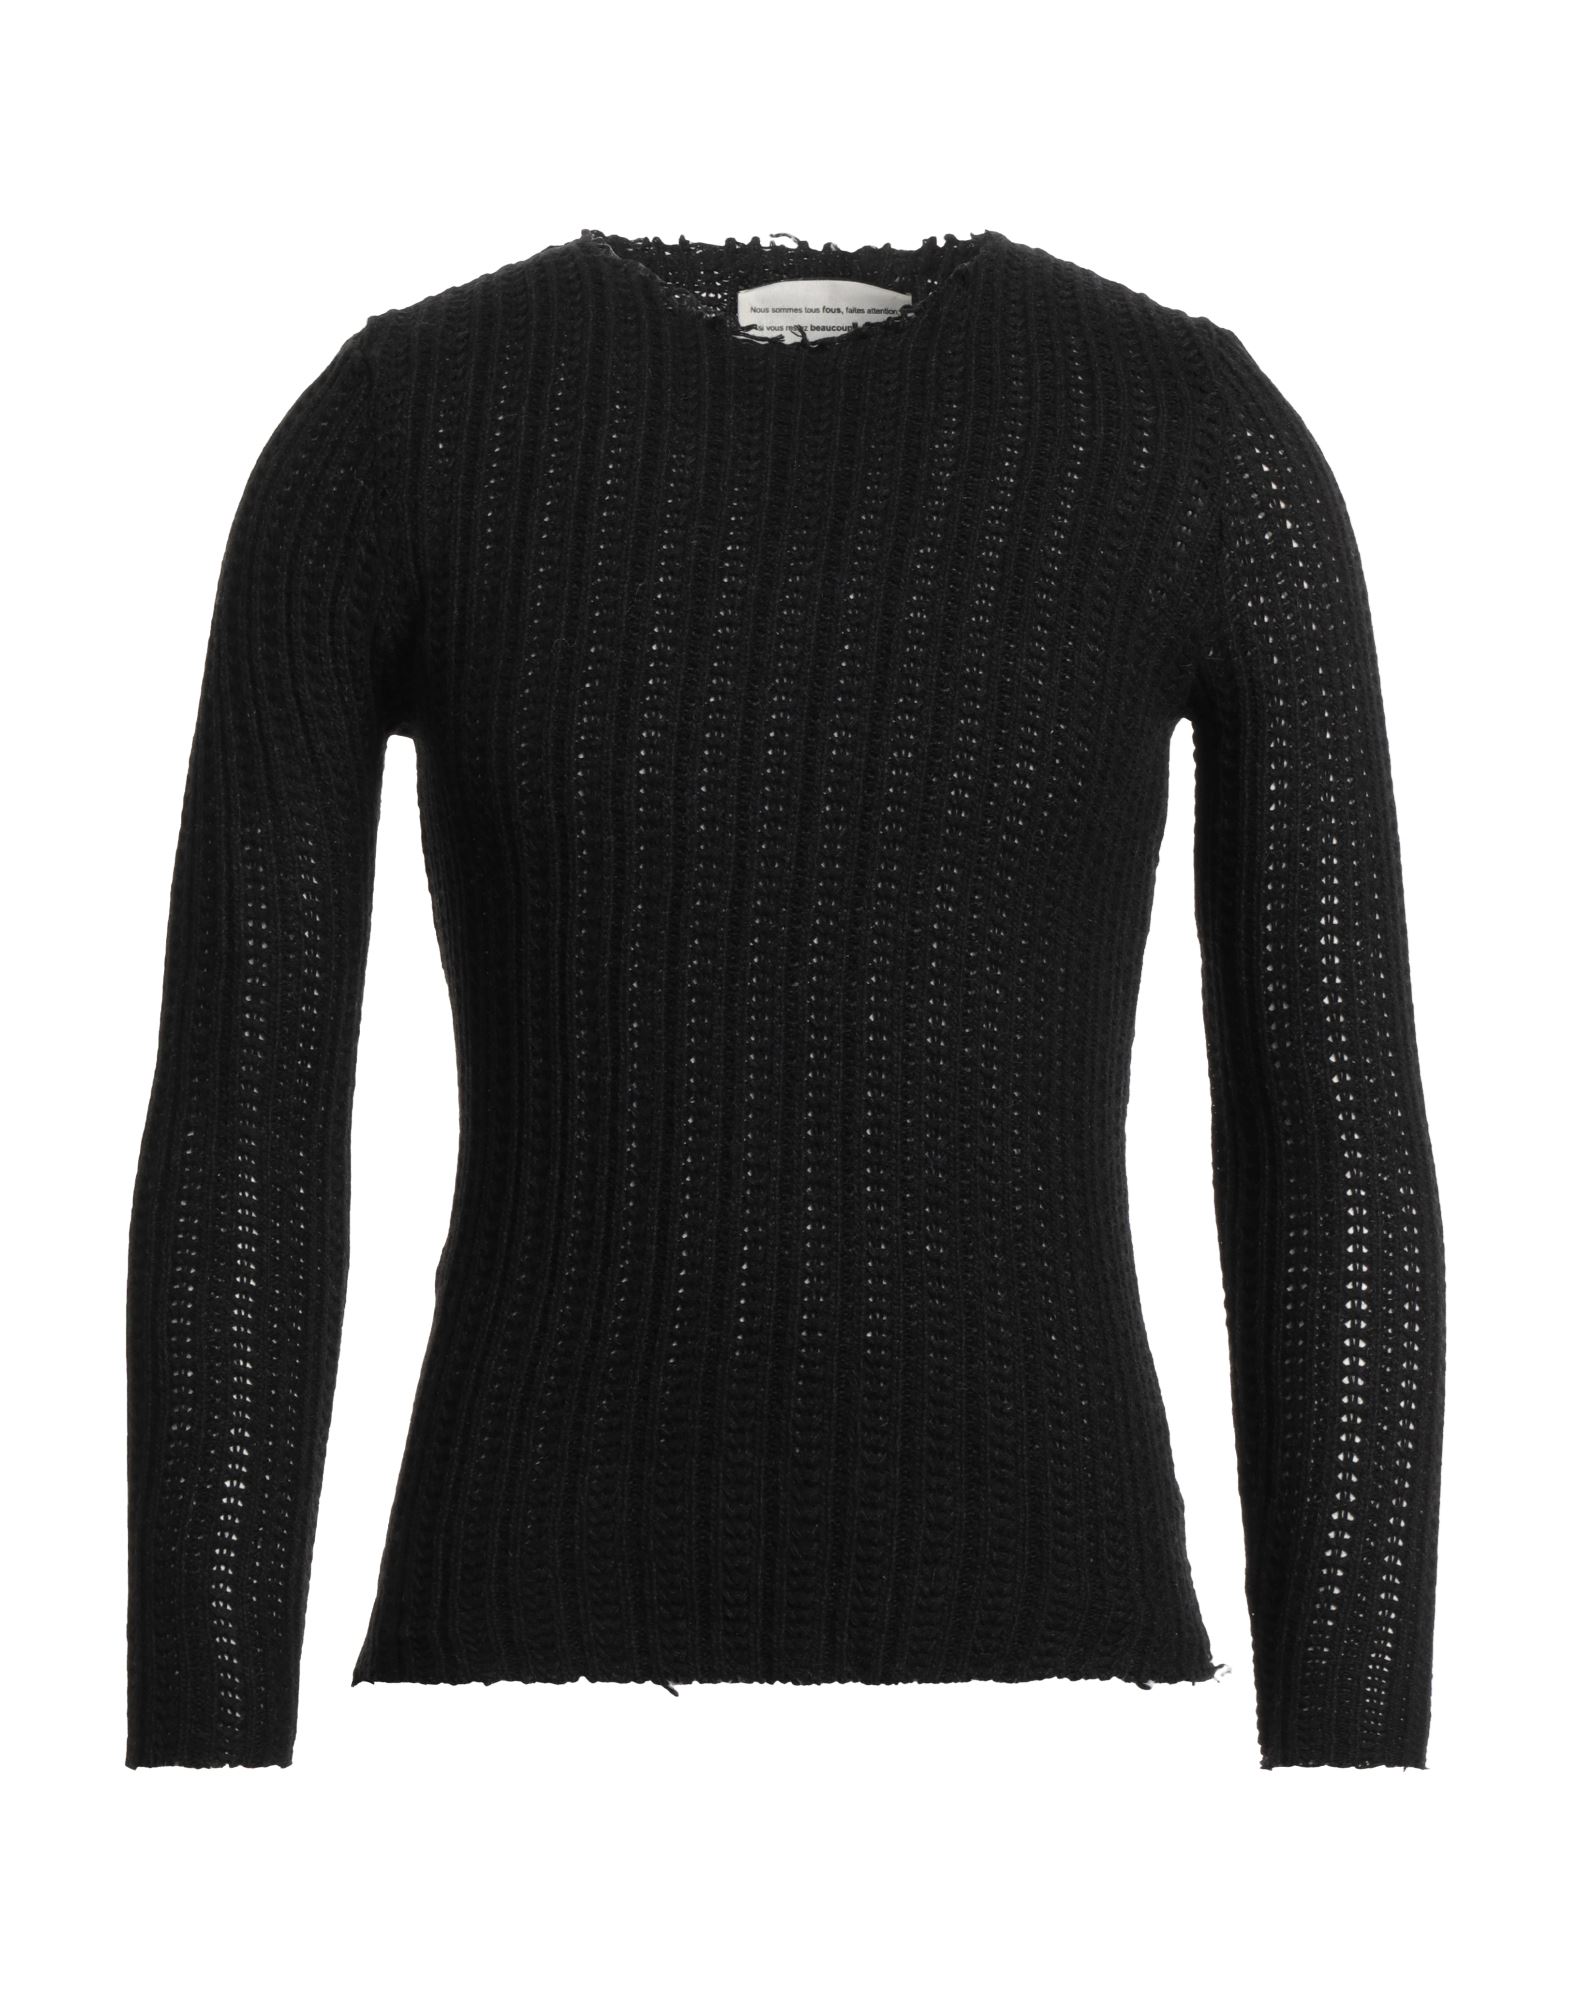 Beaucoup .., Man Sweater Black Size M Wool